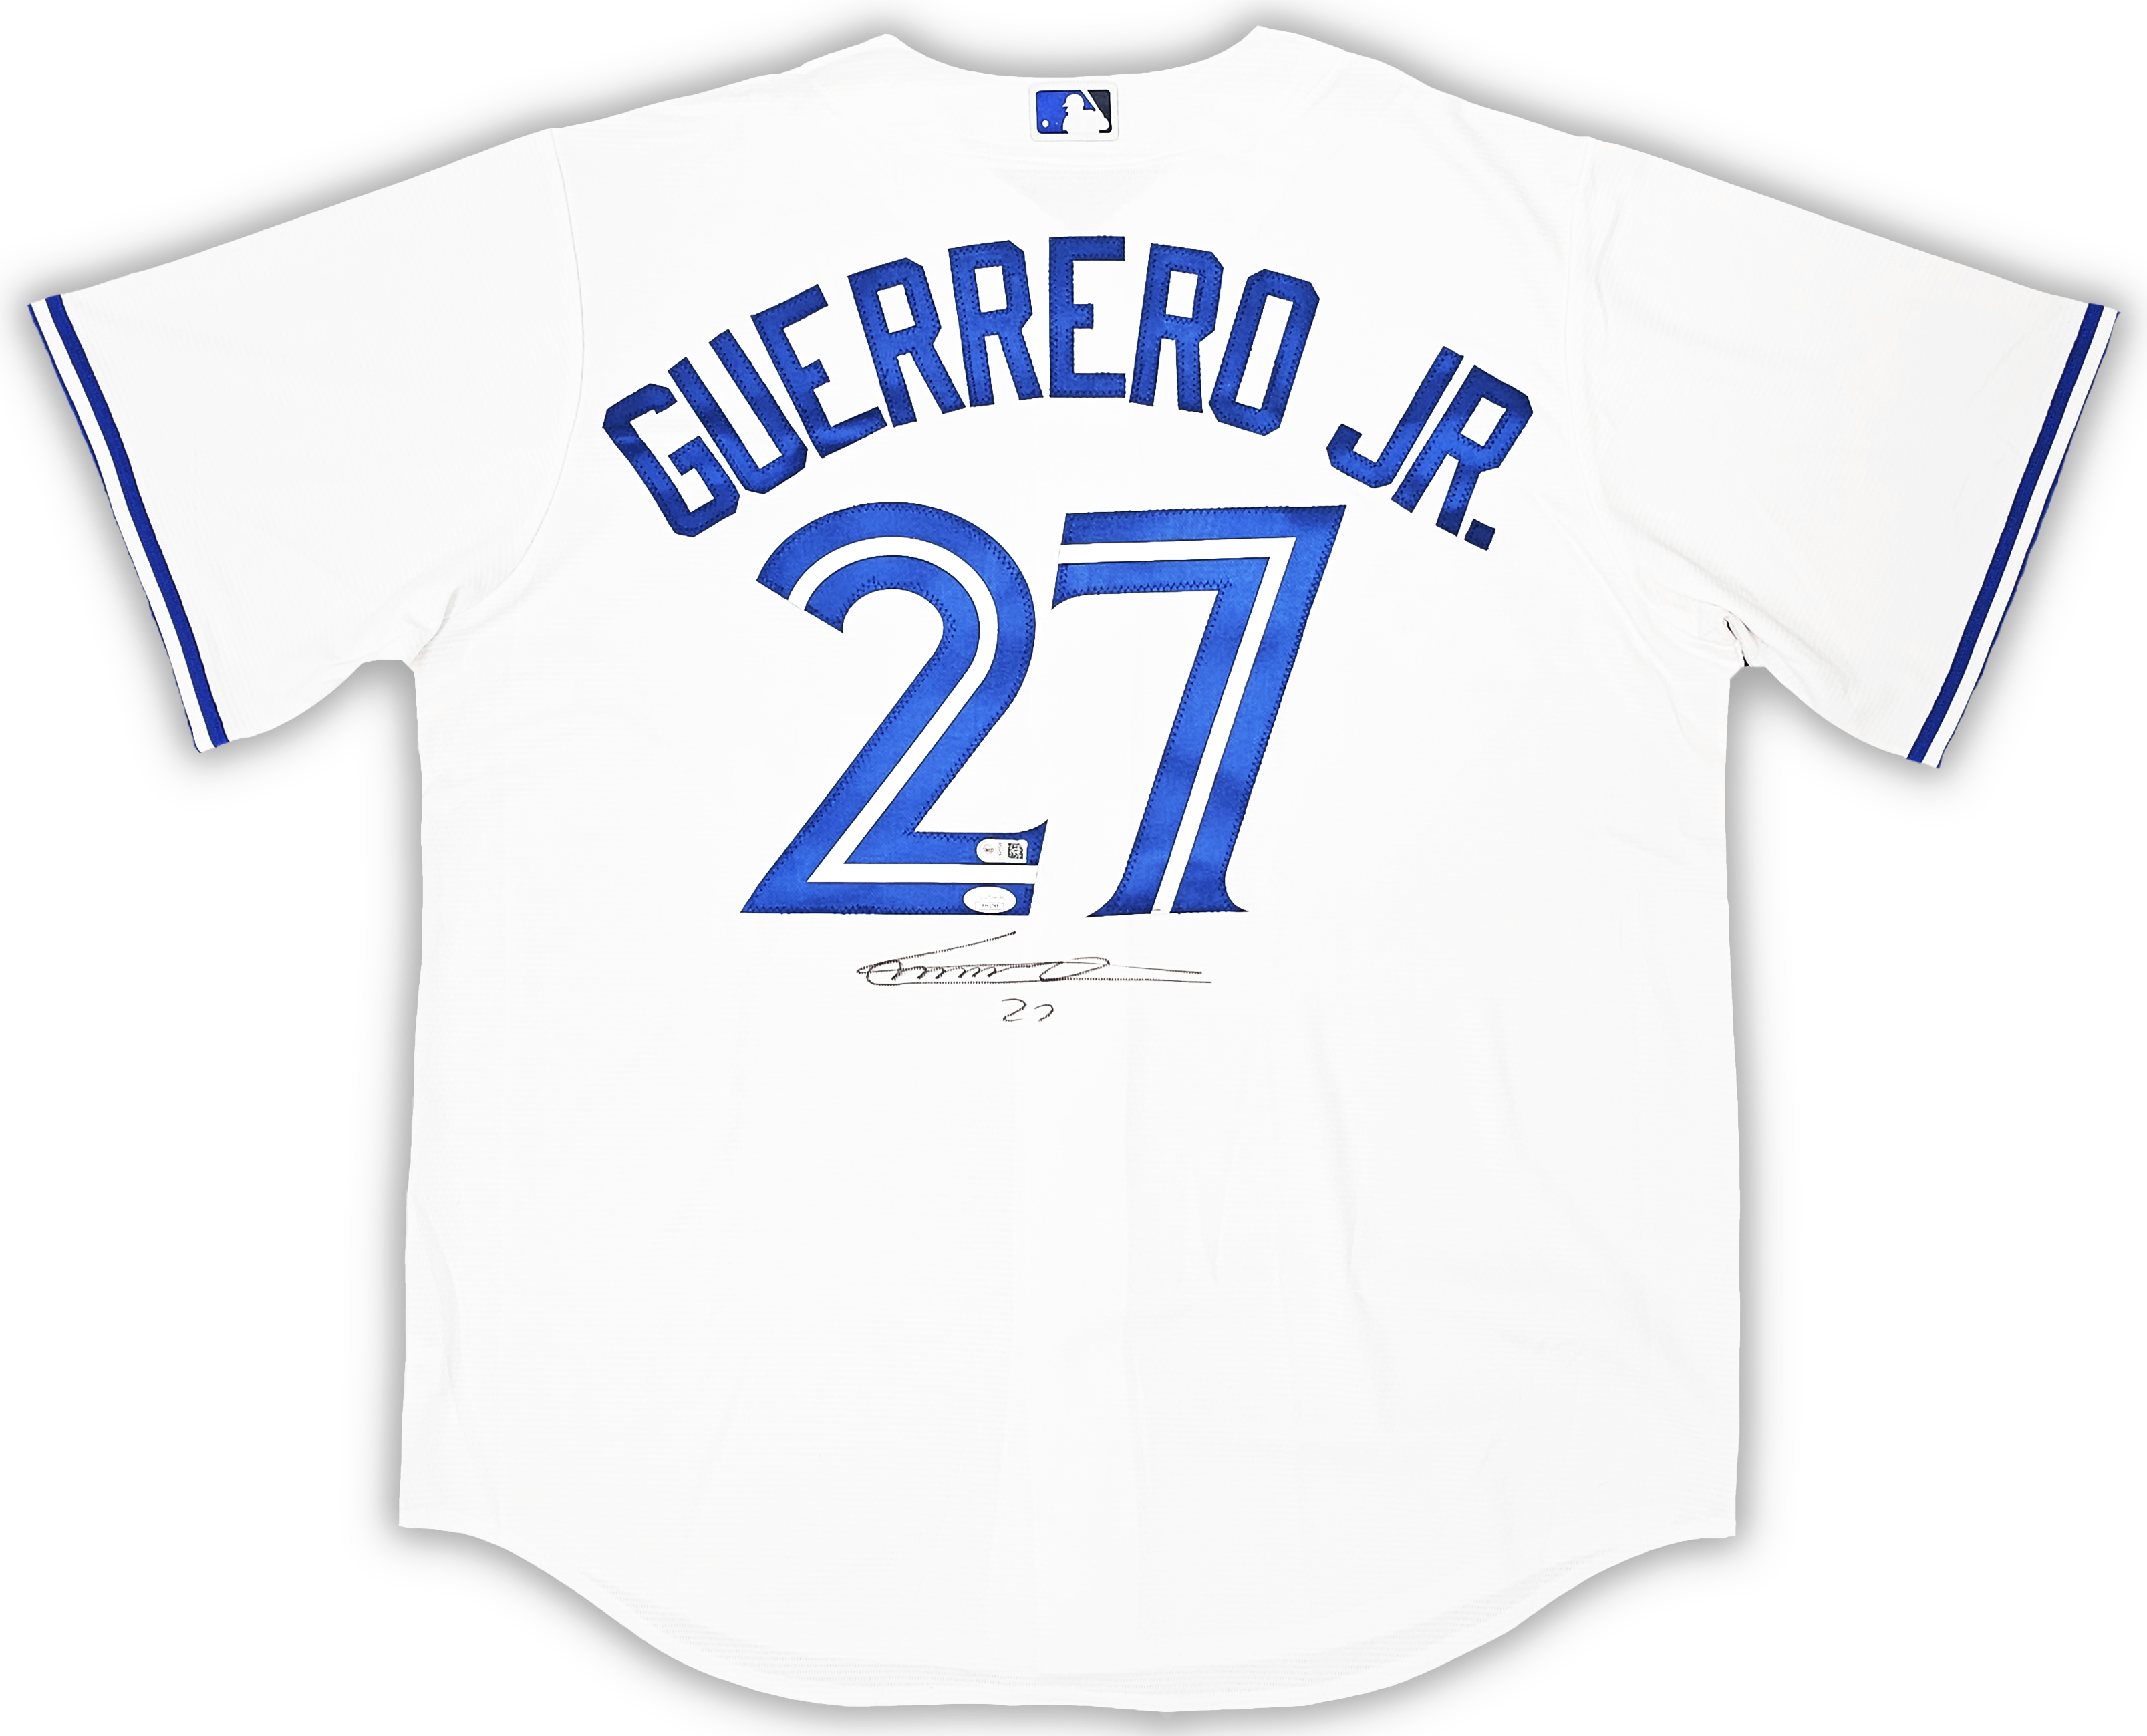 Toronto Blue Jays Vladimir Guerrero Jr. Autographed White Majestic